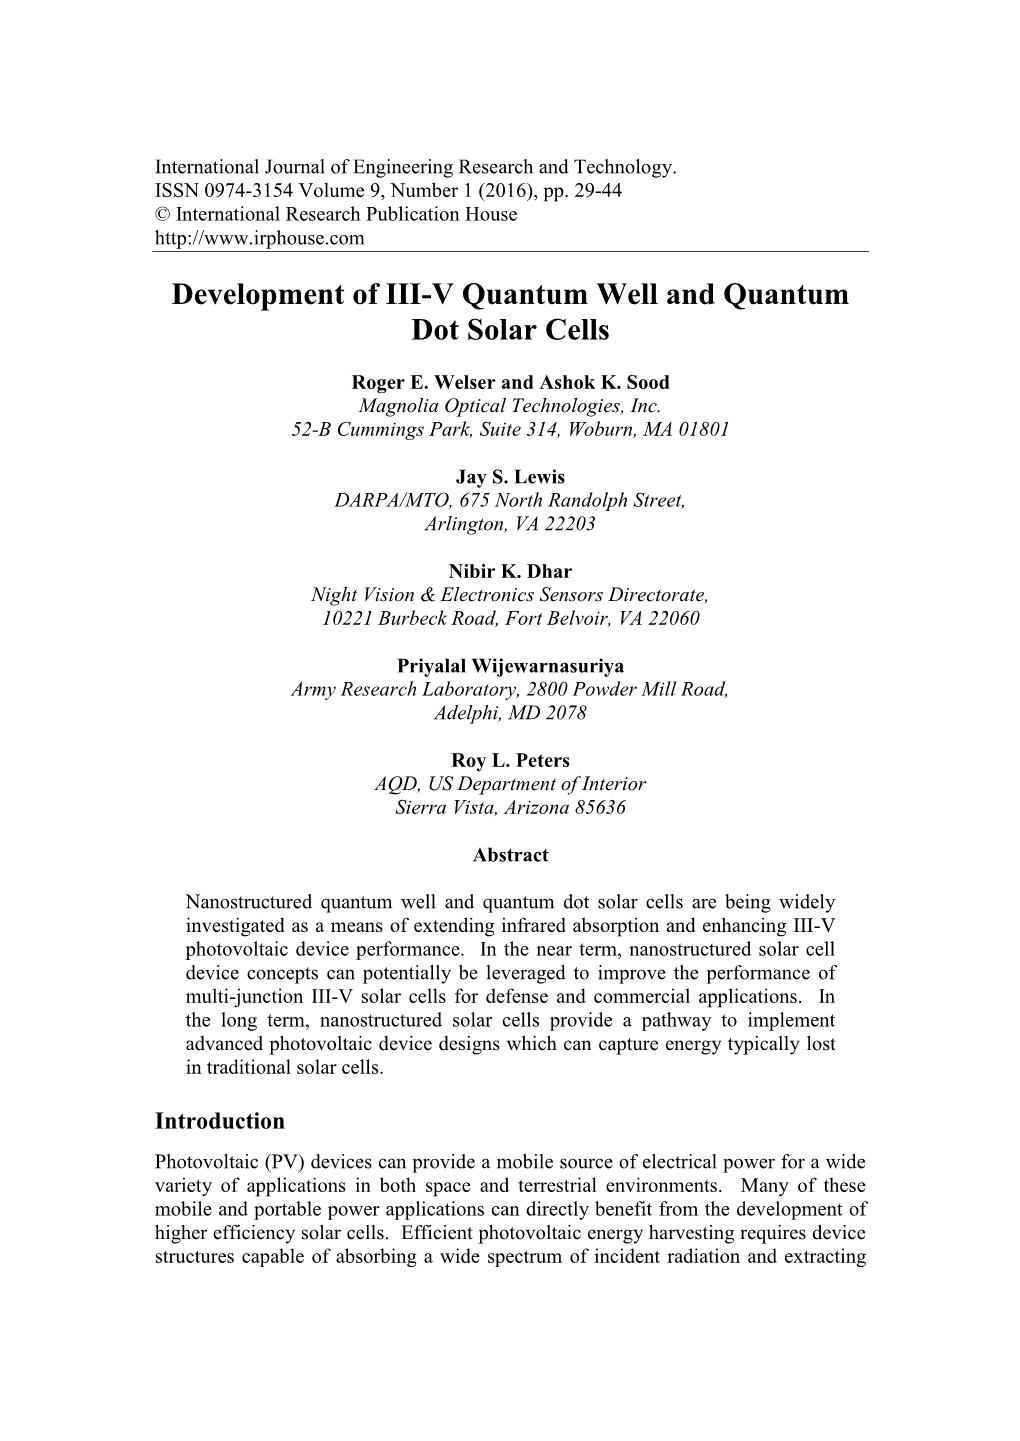 Development of III-V Quantum Well and Quantum Dot Solar Cells